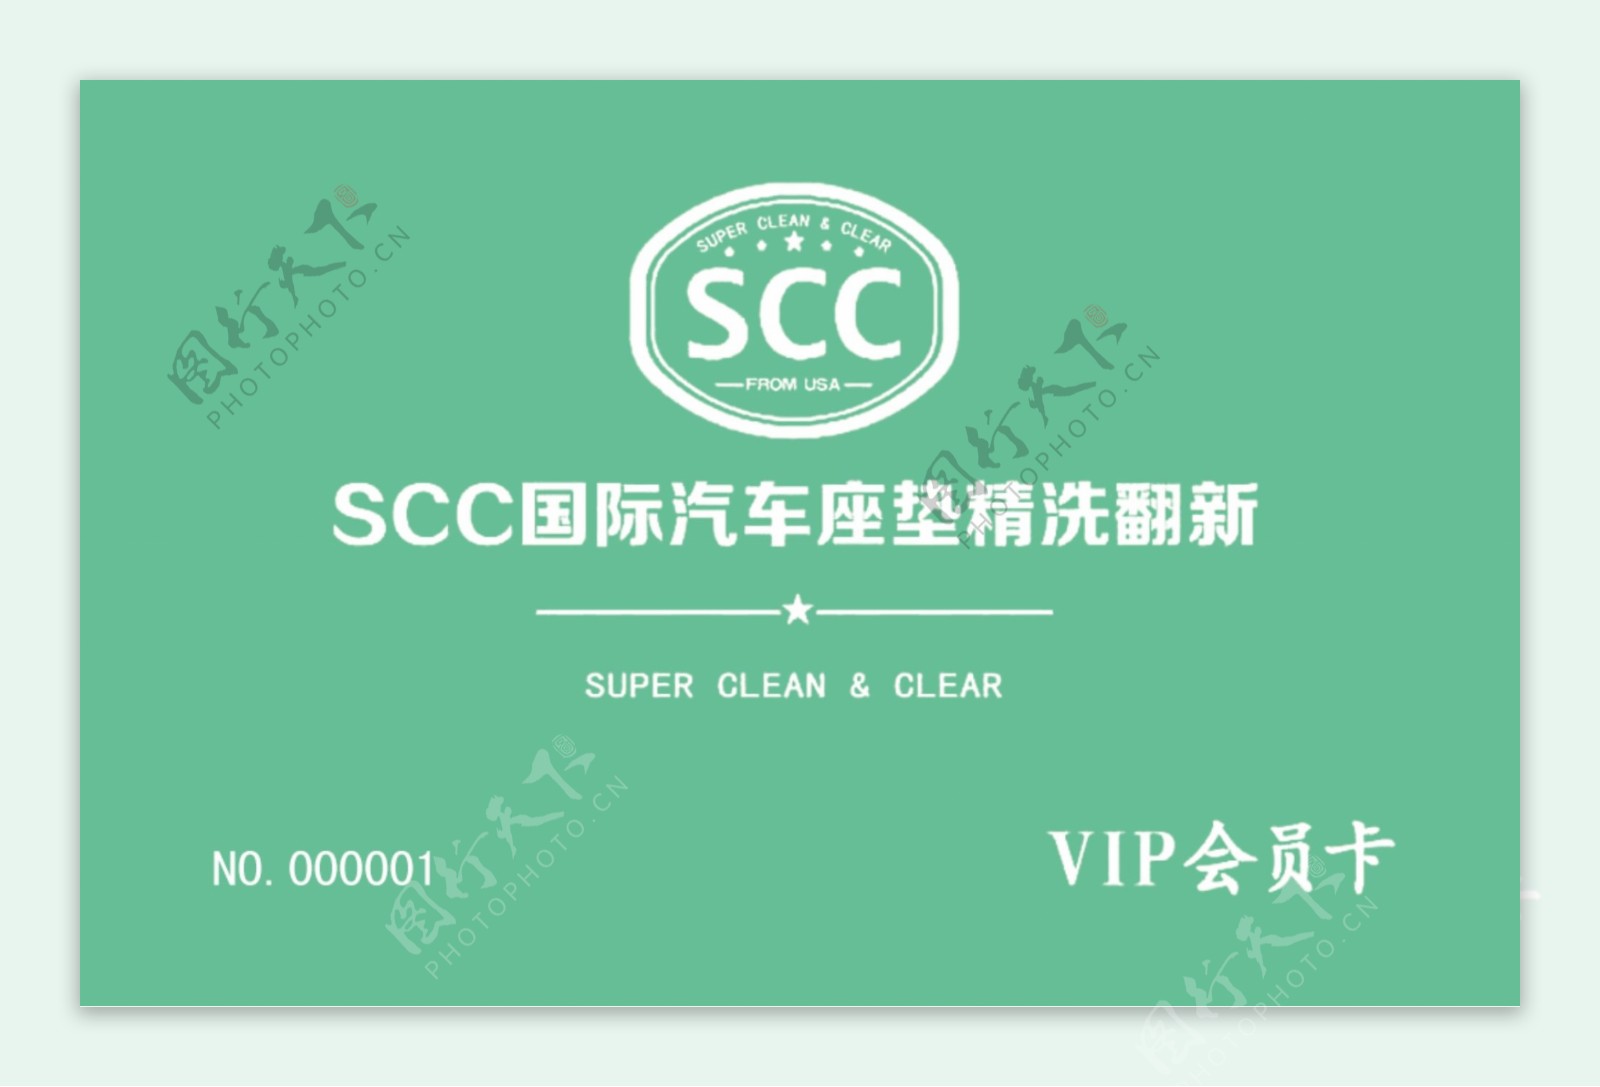 SCC国际汽车坐垫PVC